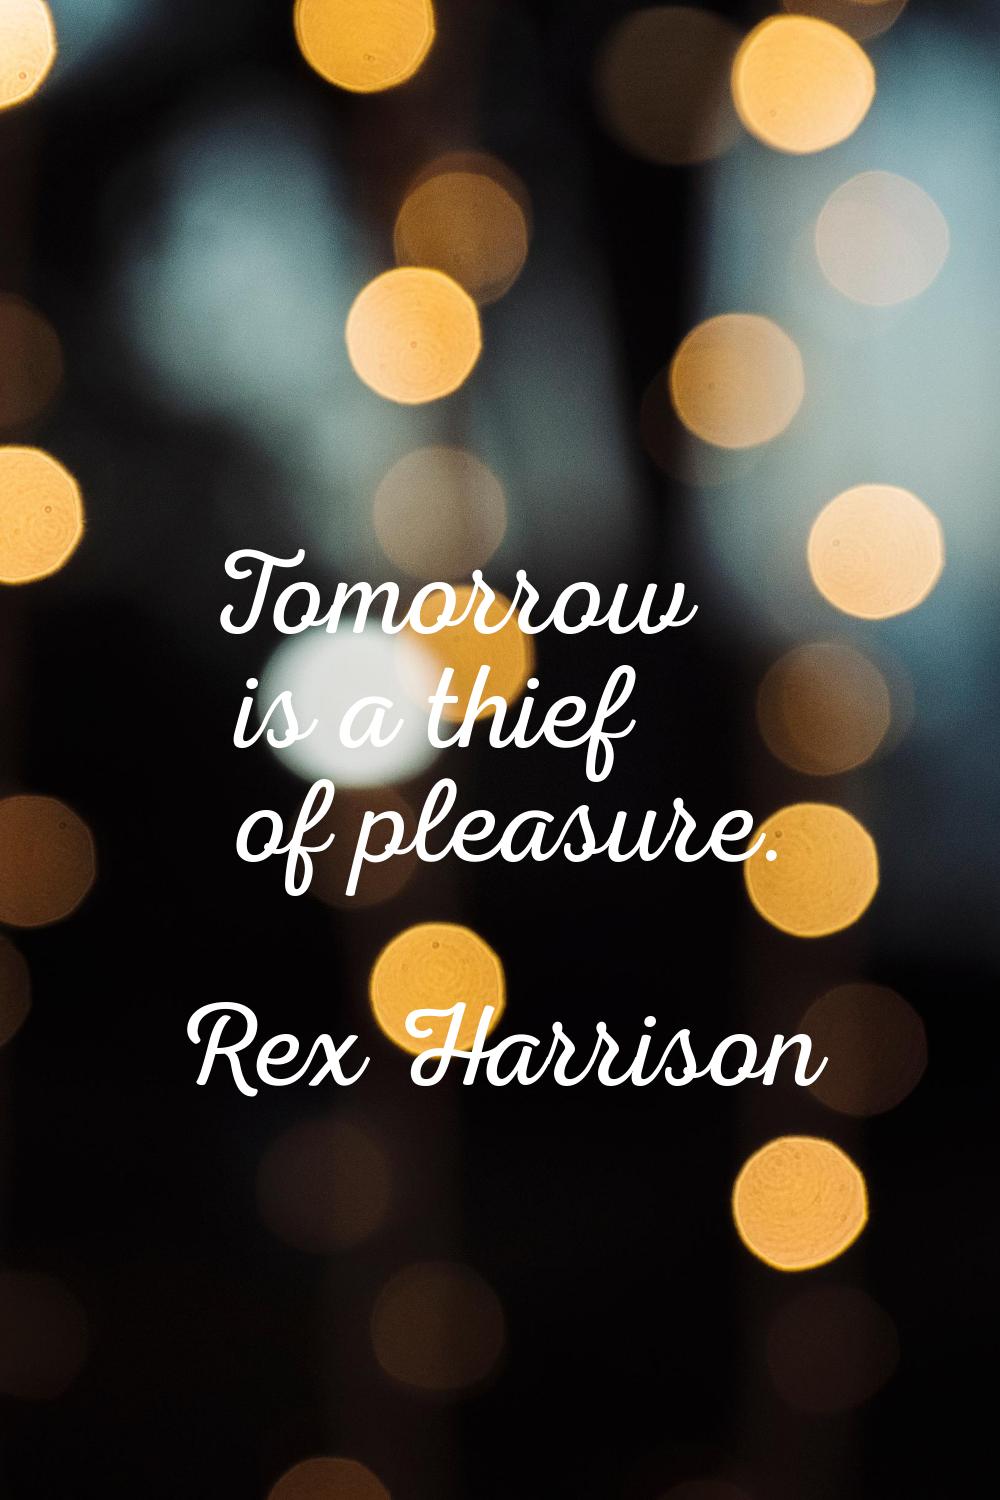 Tomorrow is a thief of pleasure.